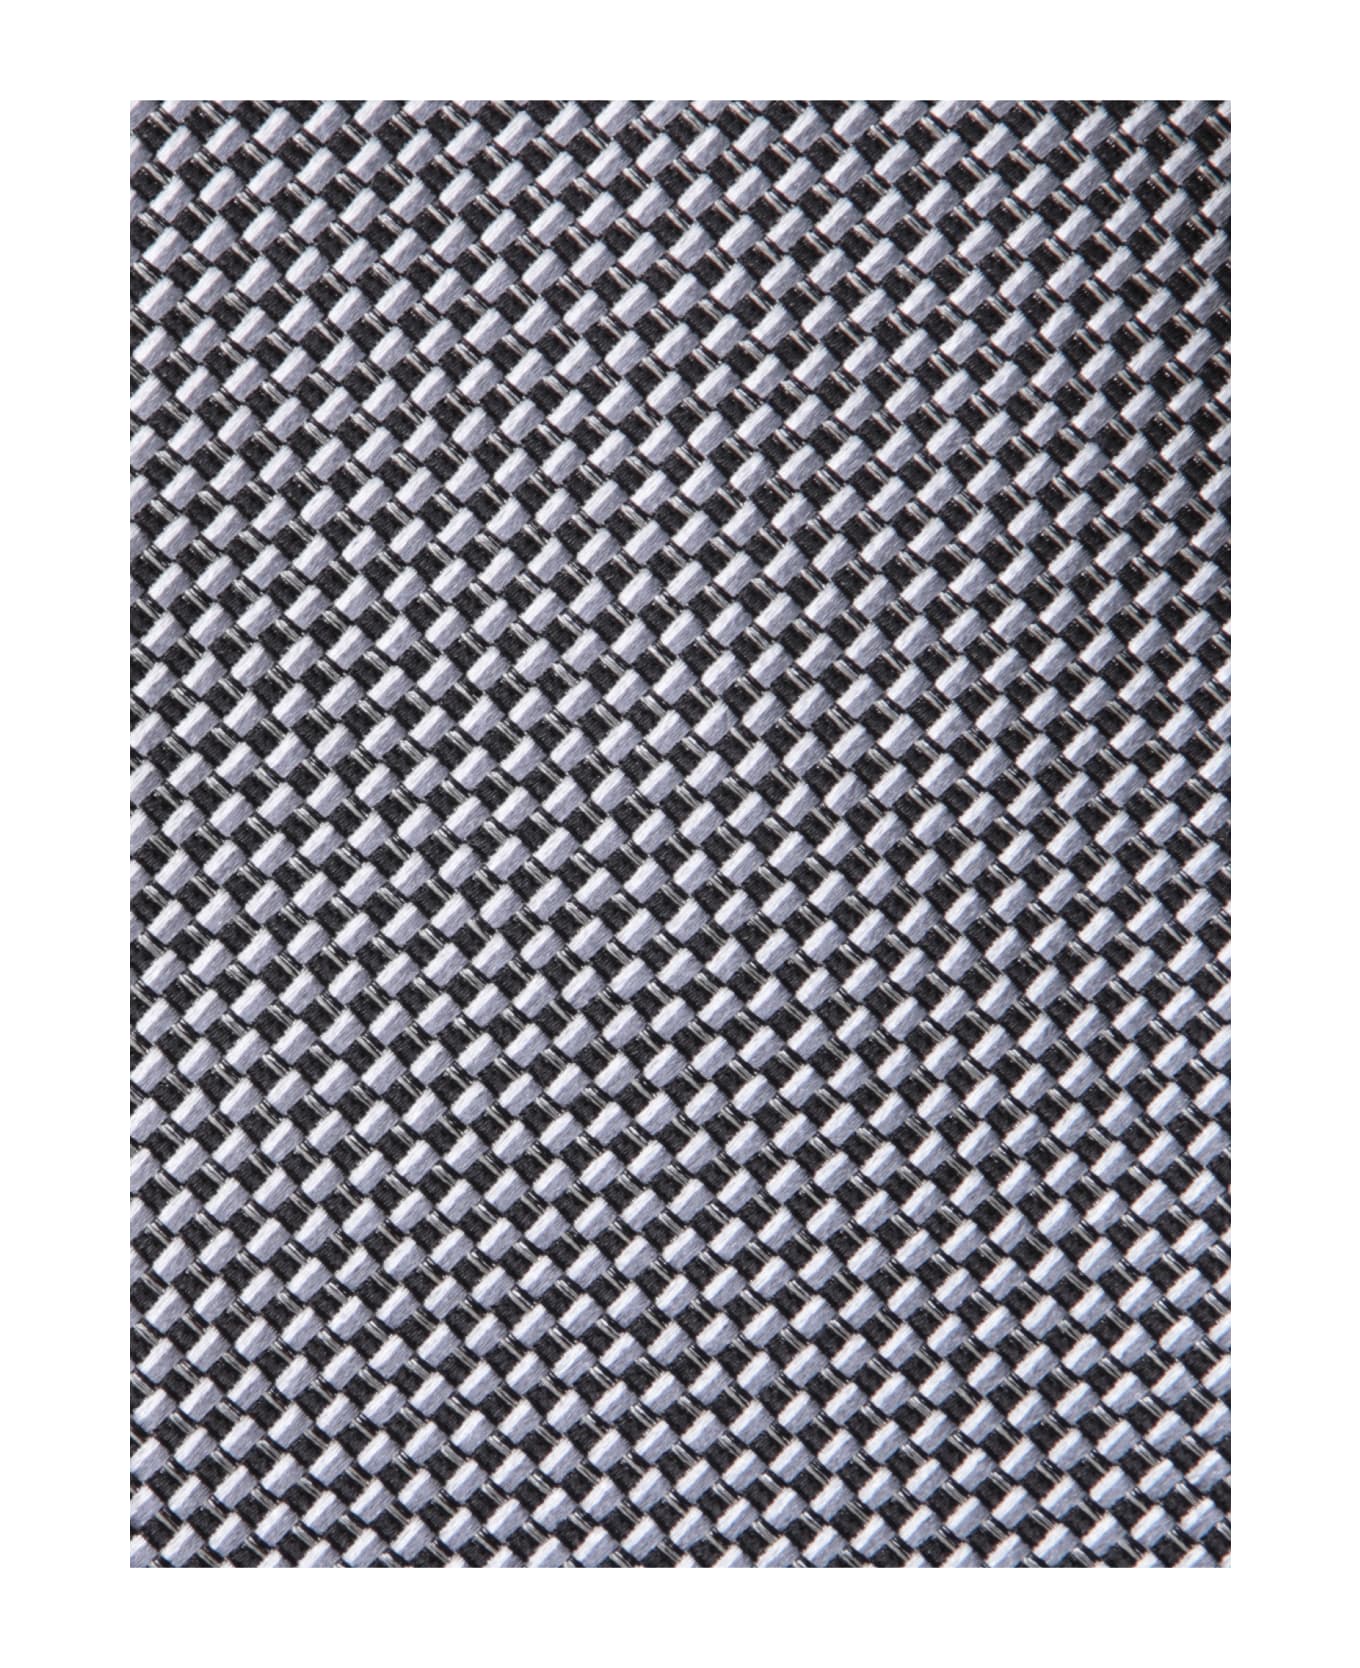 Tom Ford Geometric Silver Tie - Grey